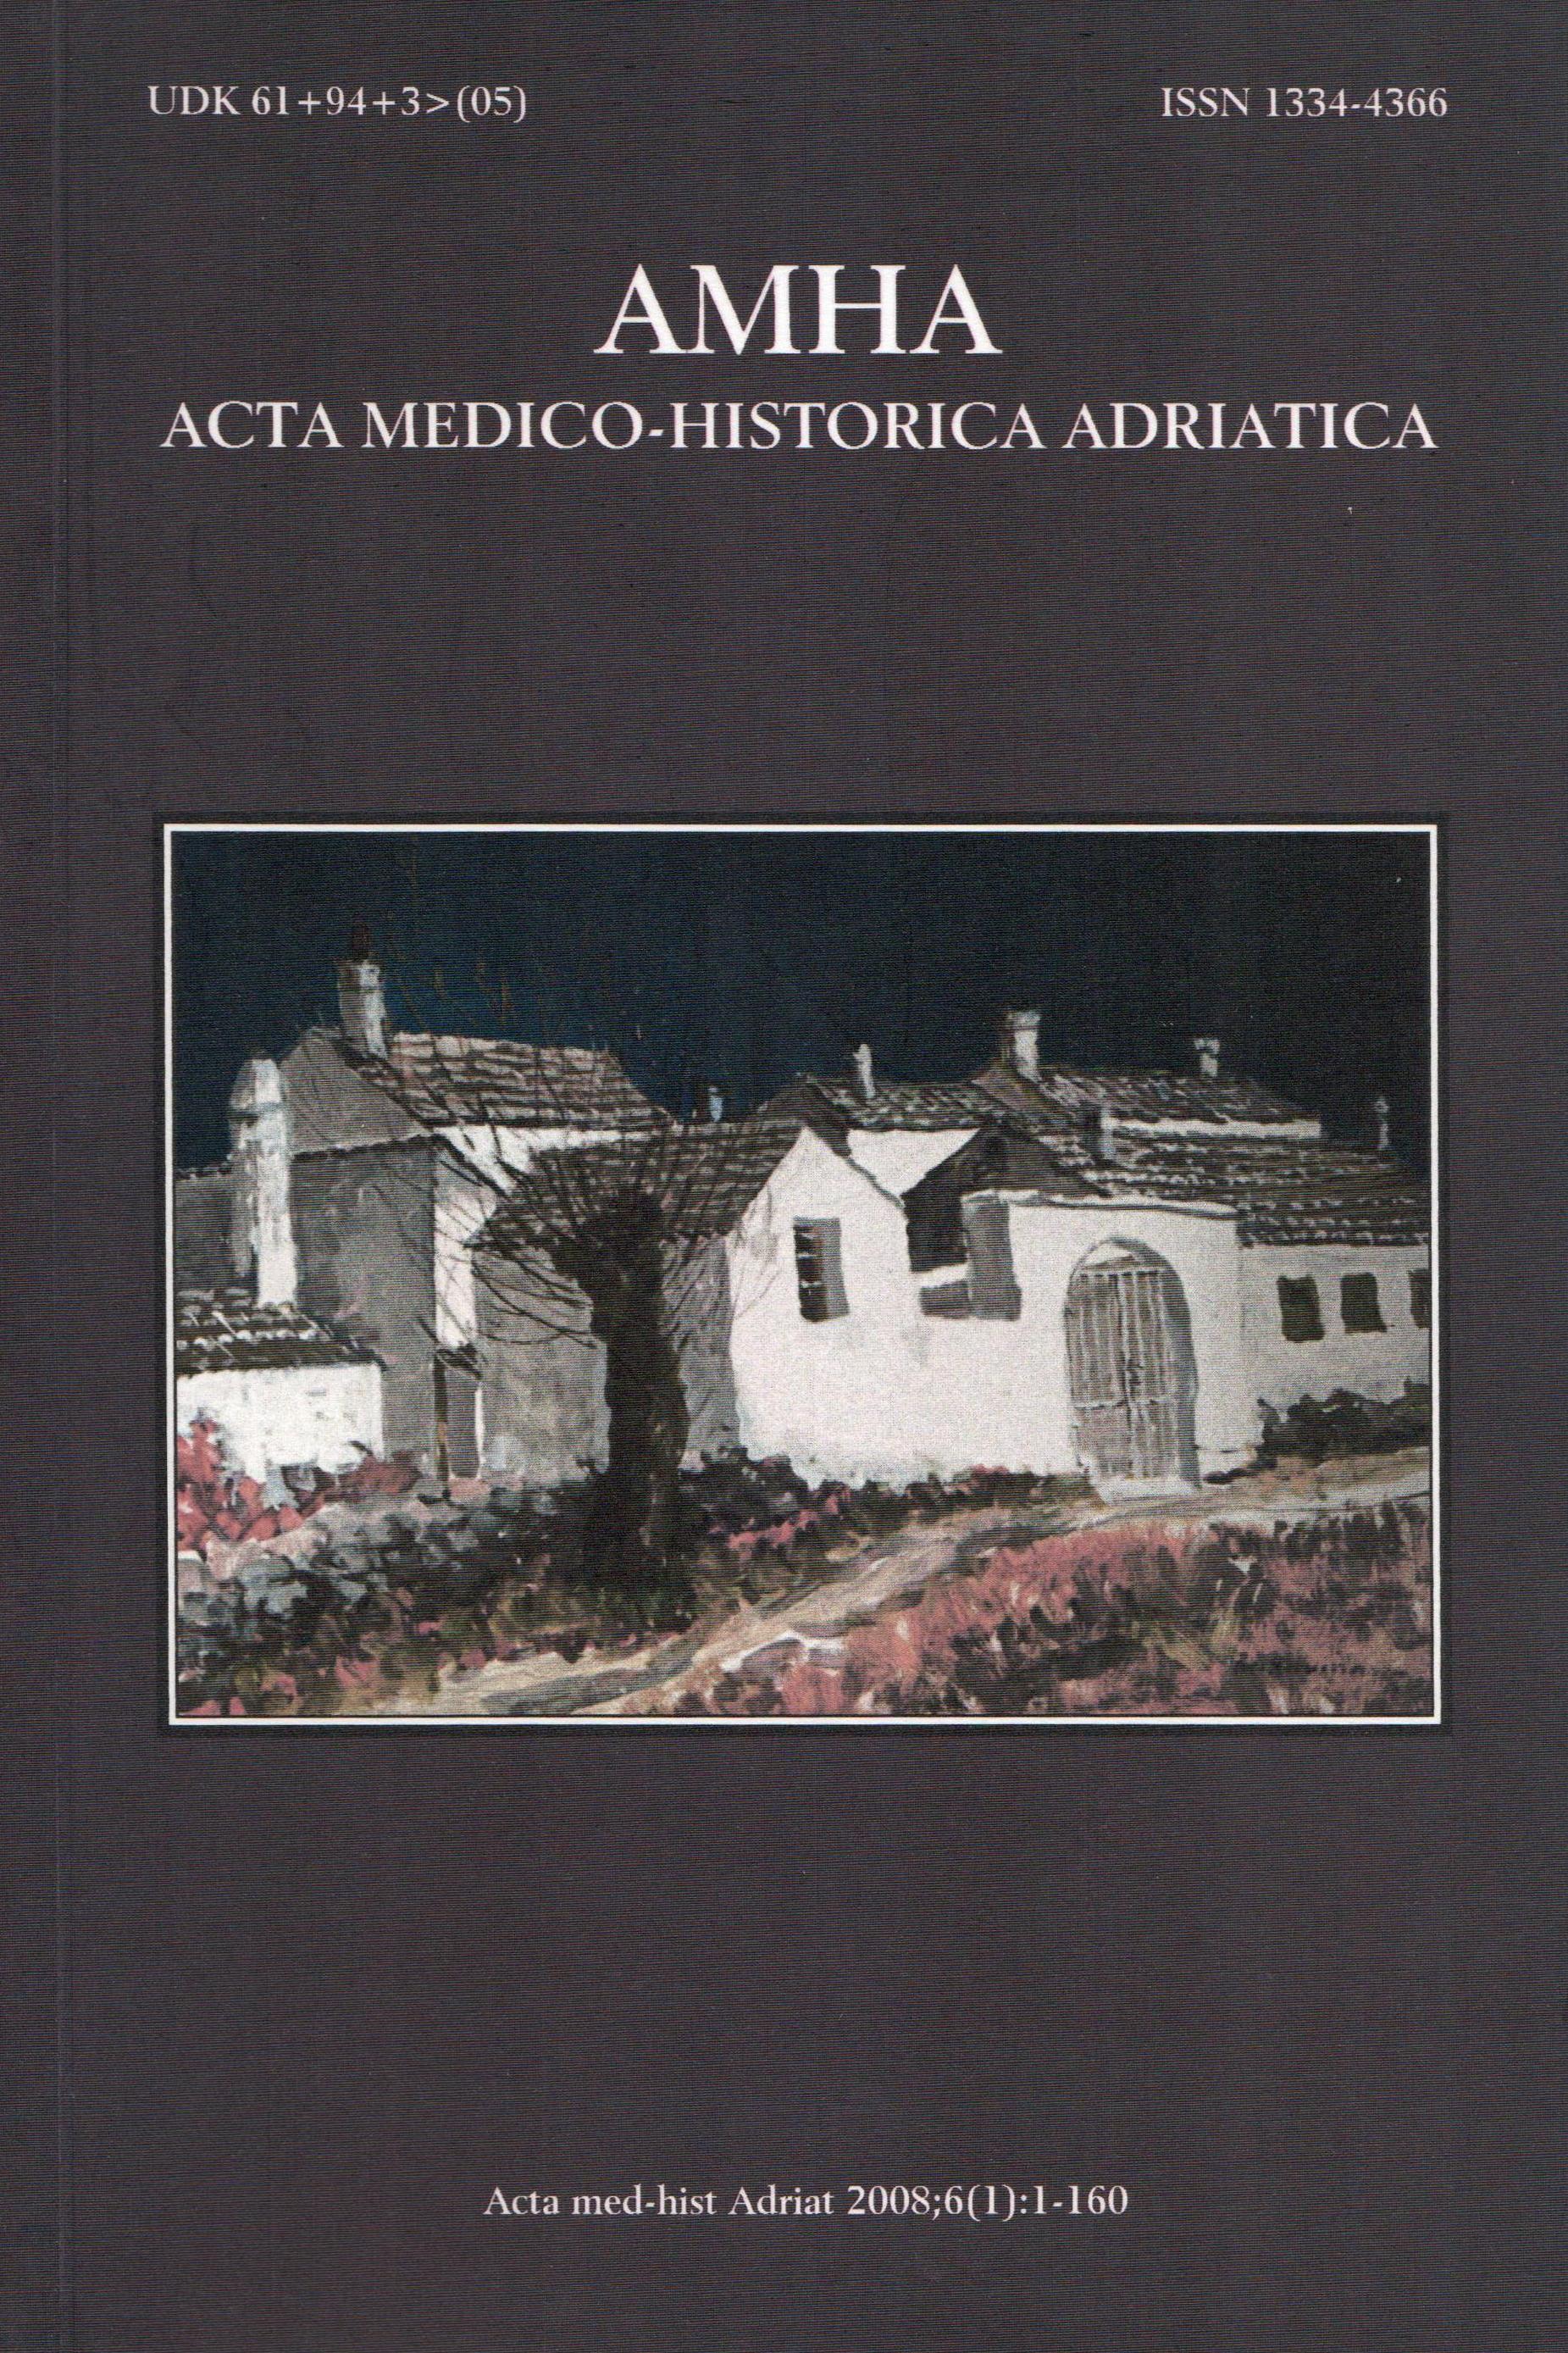 					View Vol. 6 No. 1 (2008):   Vol 6 No 1 (2008): AMHA – Acta medico-historica Adriatica
				